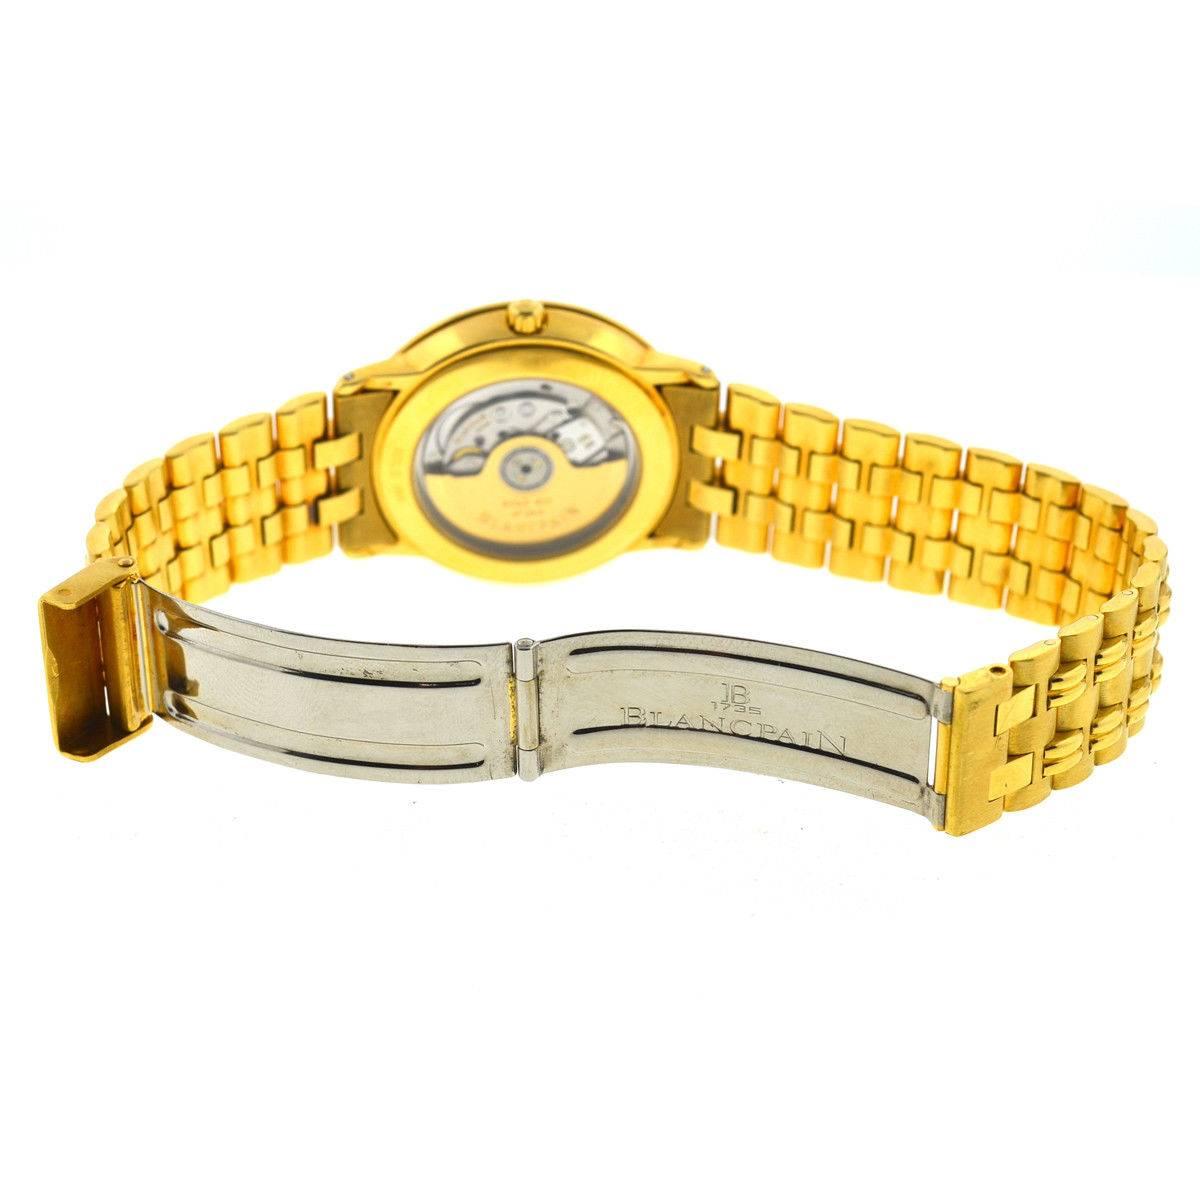 Blancpain Villeret 4795 Automatic Watch 18 Karat Yellow Gold 4